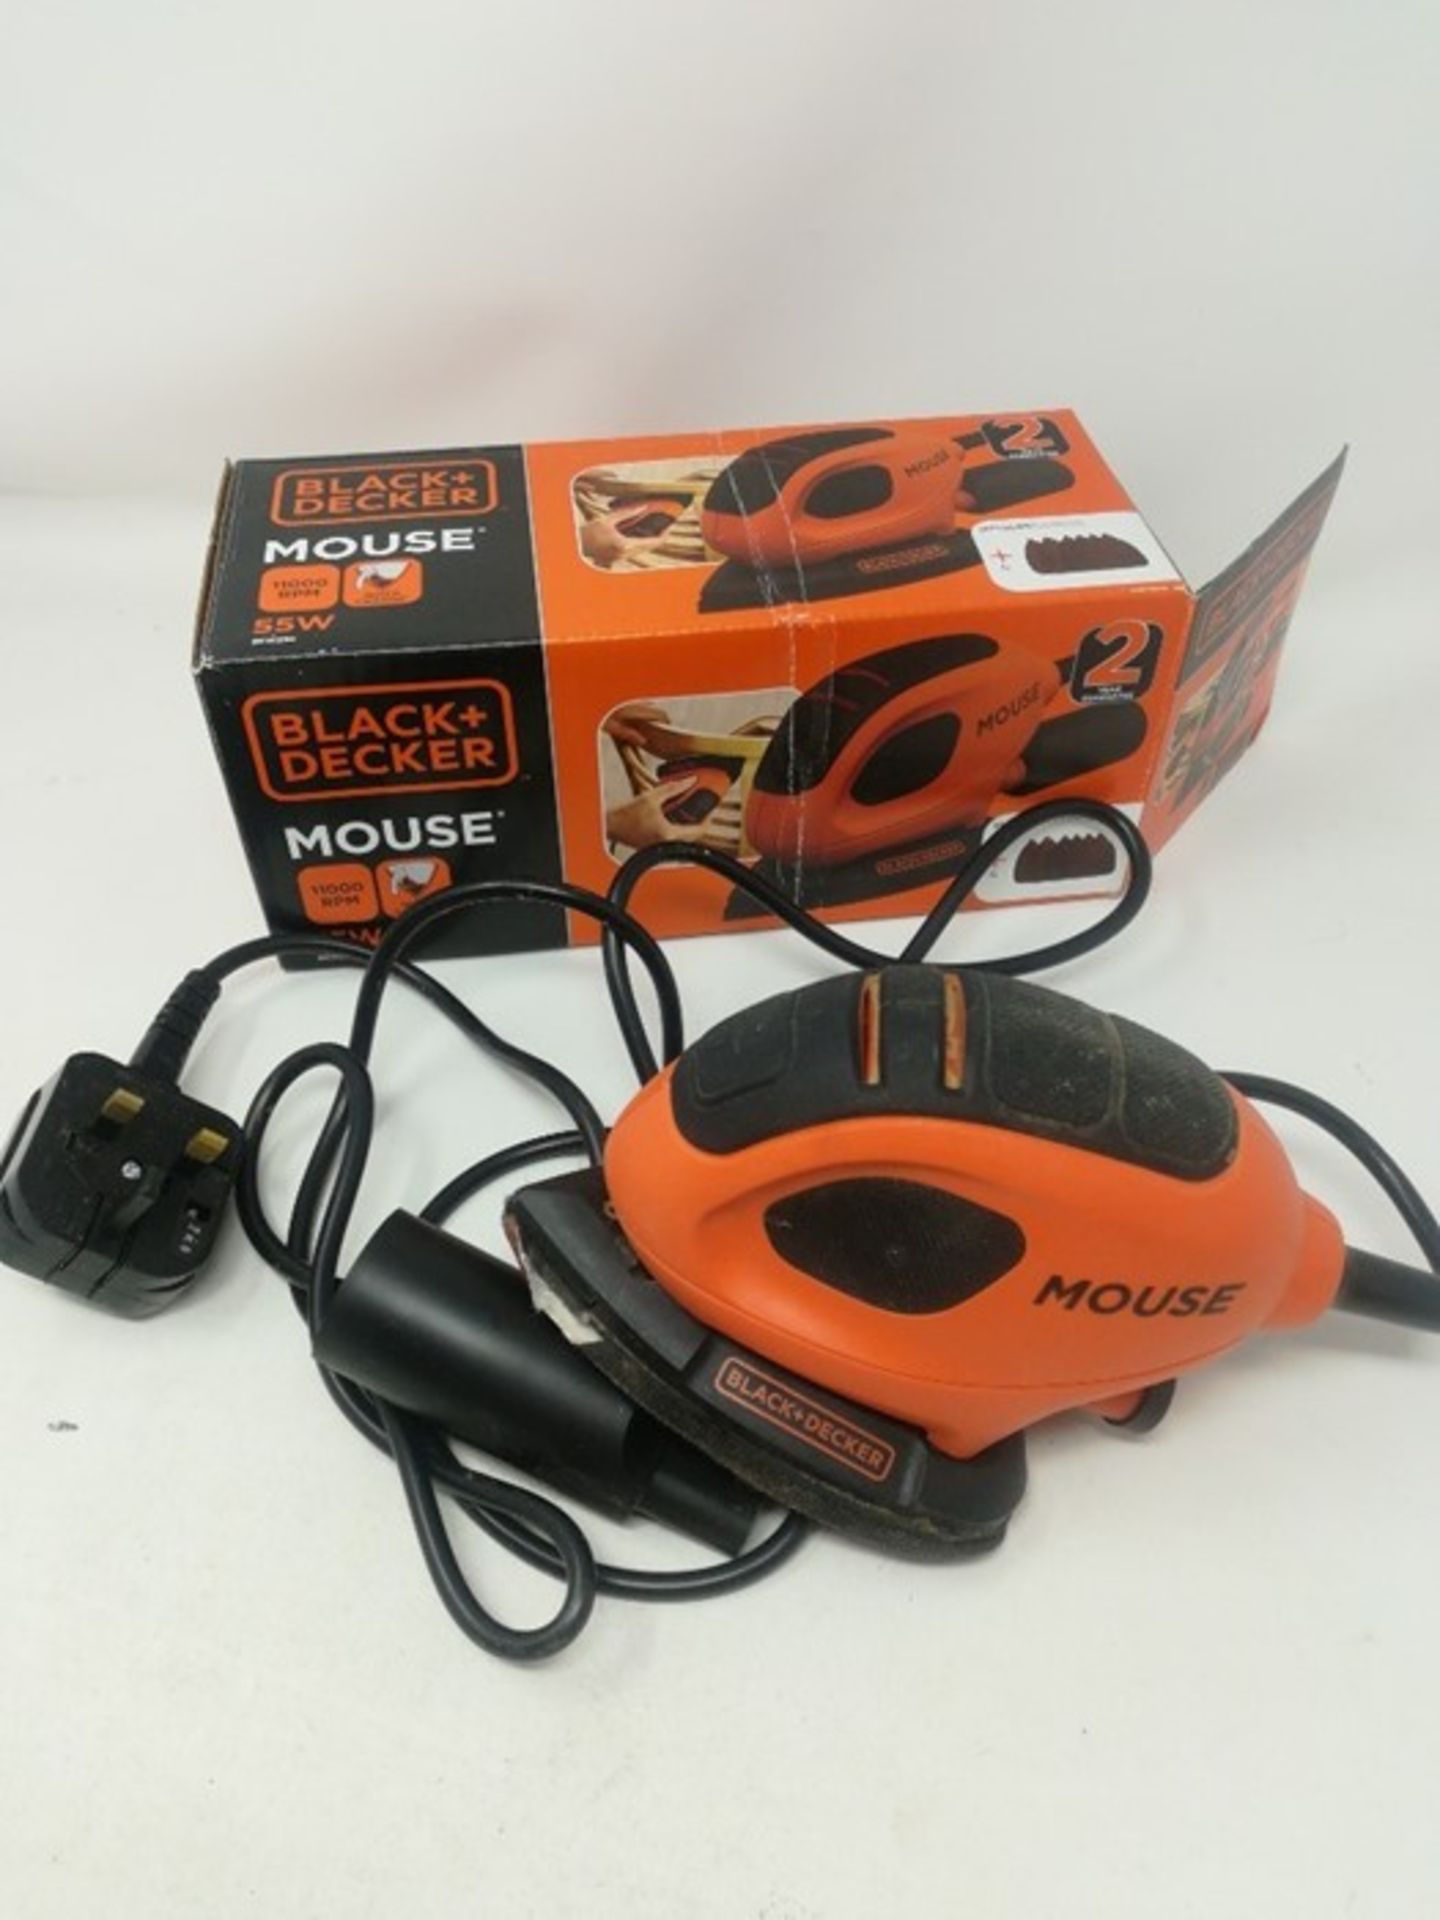 BLACK+DECKER 55 W Detail Mouse Electric Sander w - Image 2 of 2